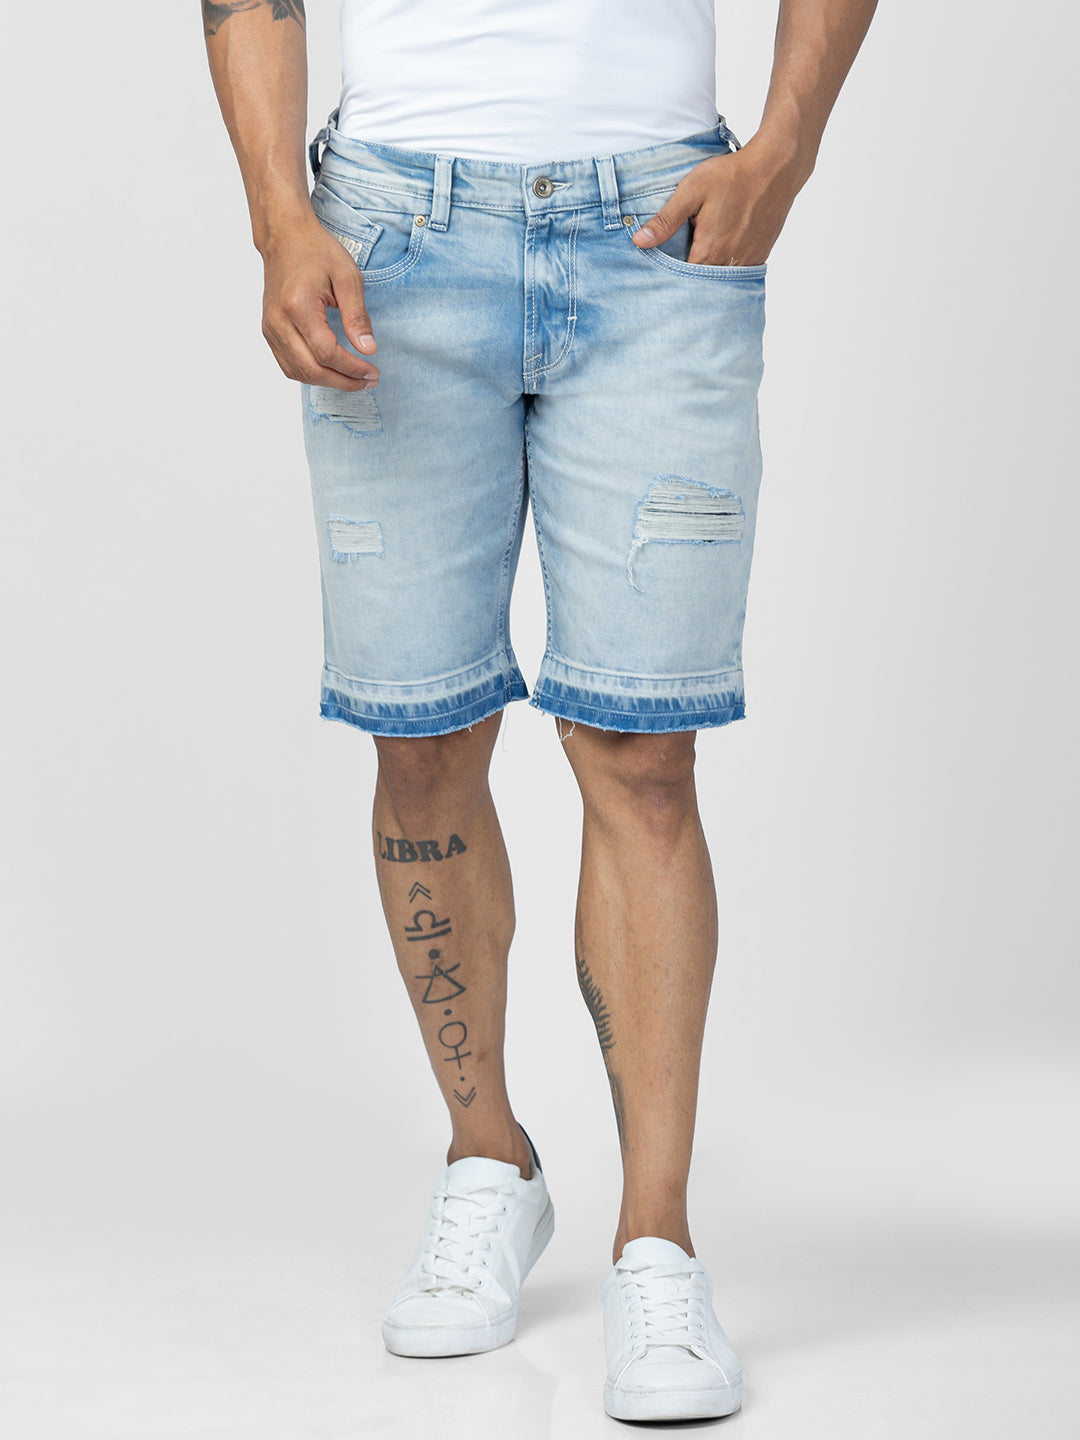 Men Skinny Jeans New Model Ripped| Alibaba.com